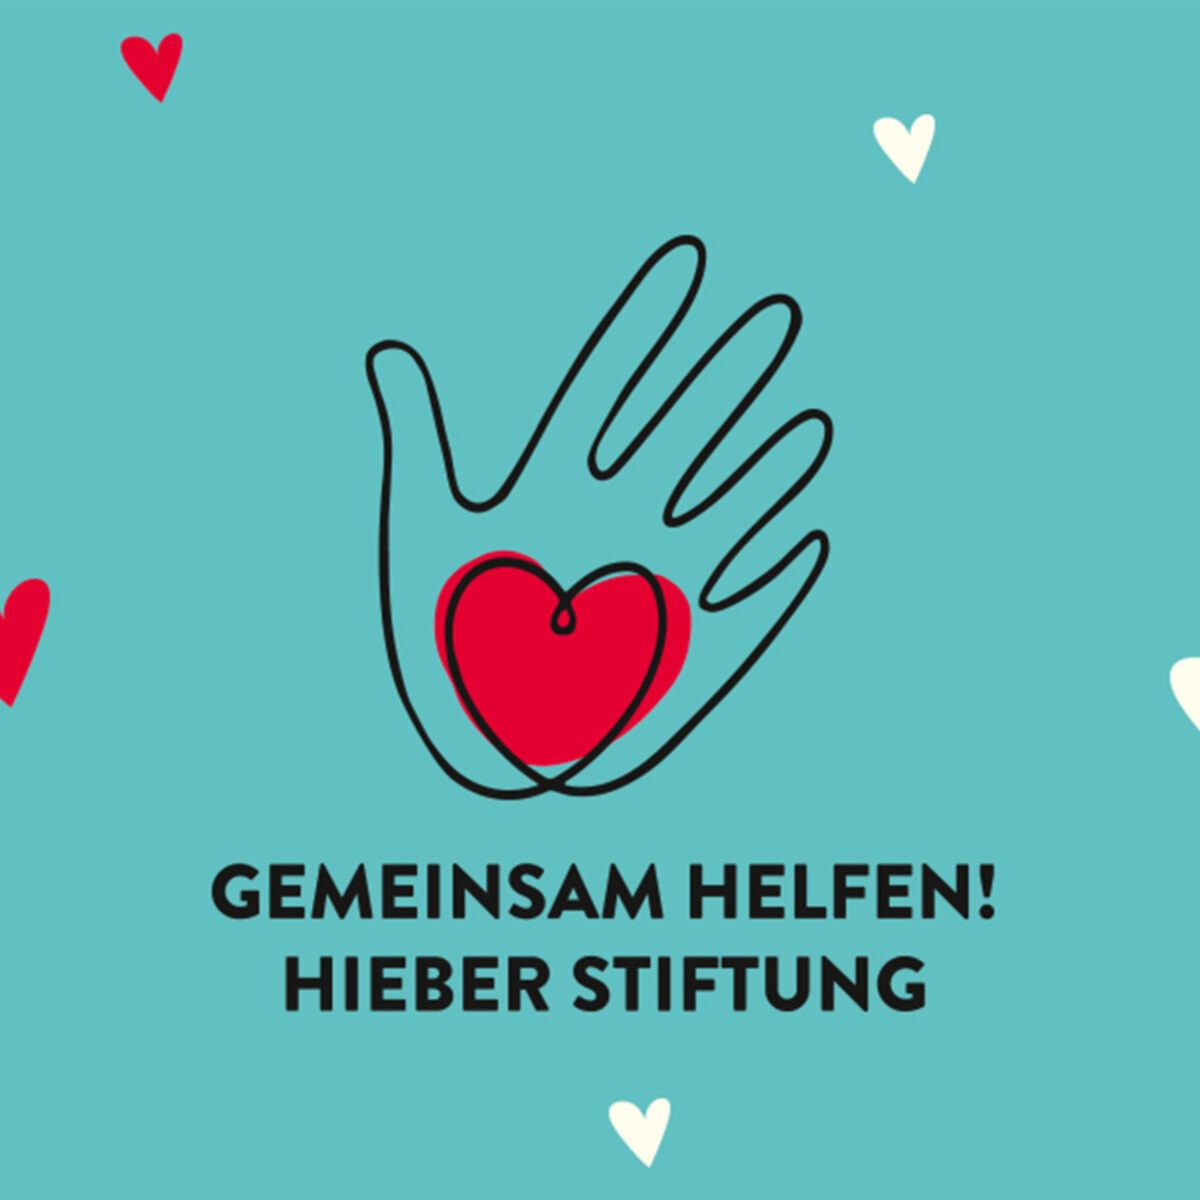 Hieber_Hieber_Stiftung_Header